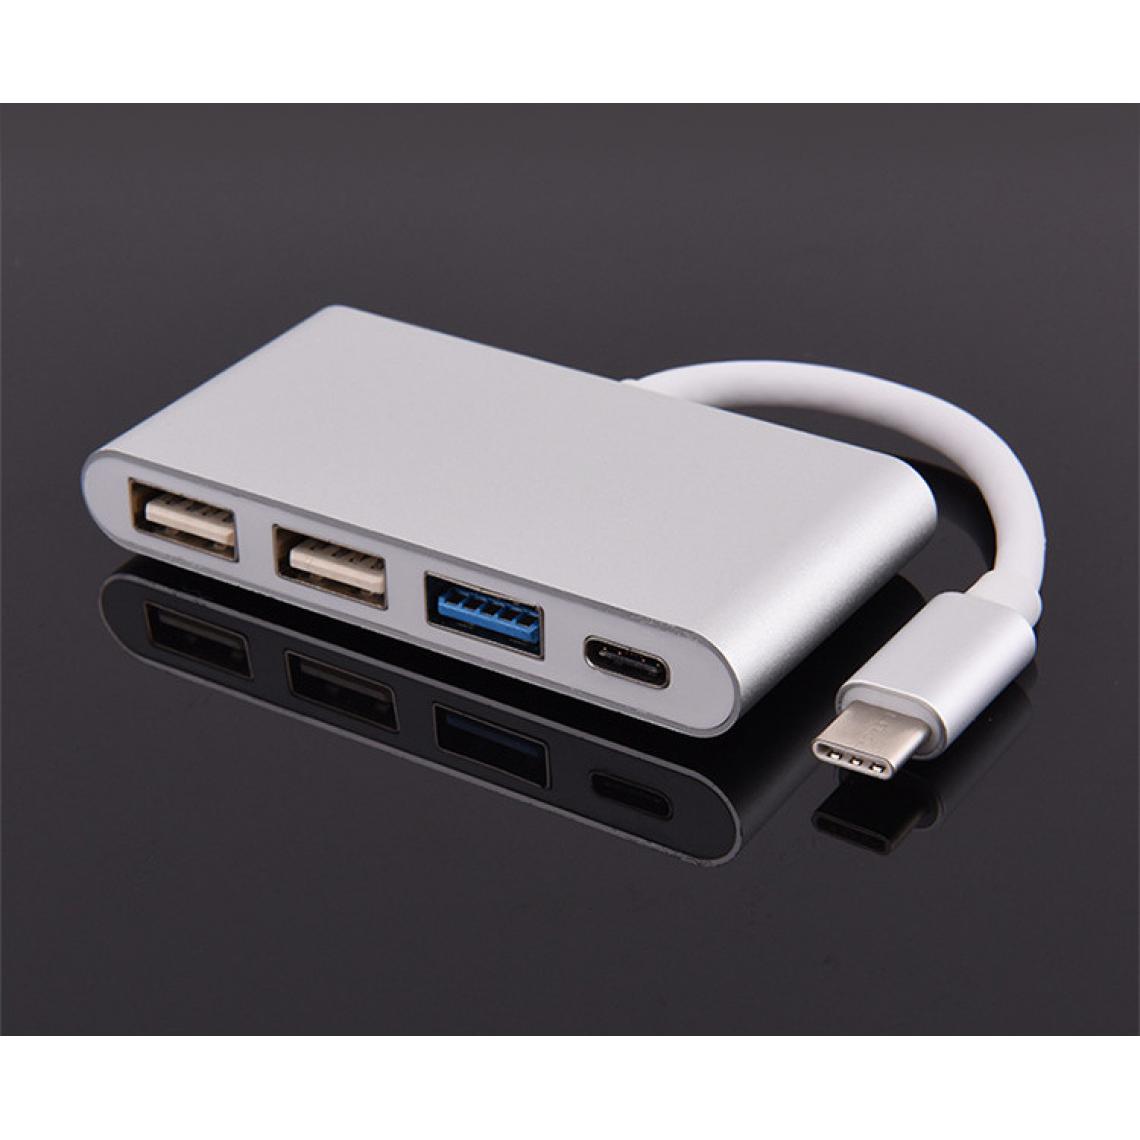 Shot - Multi Adaptateur 4 en 1 Type C pour SONY Xperia XZ1 Compact Smartphone Hub 2 ports USB 2.0 1 Port USB 3.0 (ARGENT) - Hub